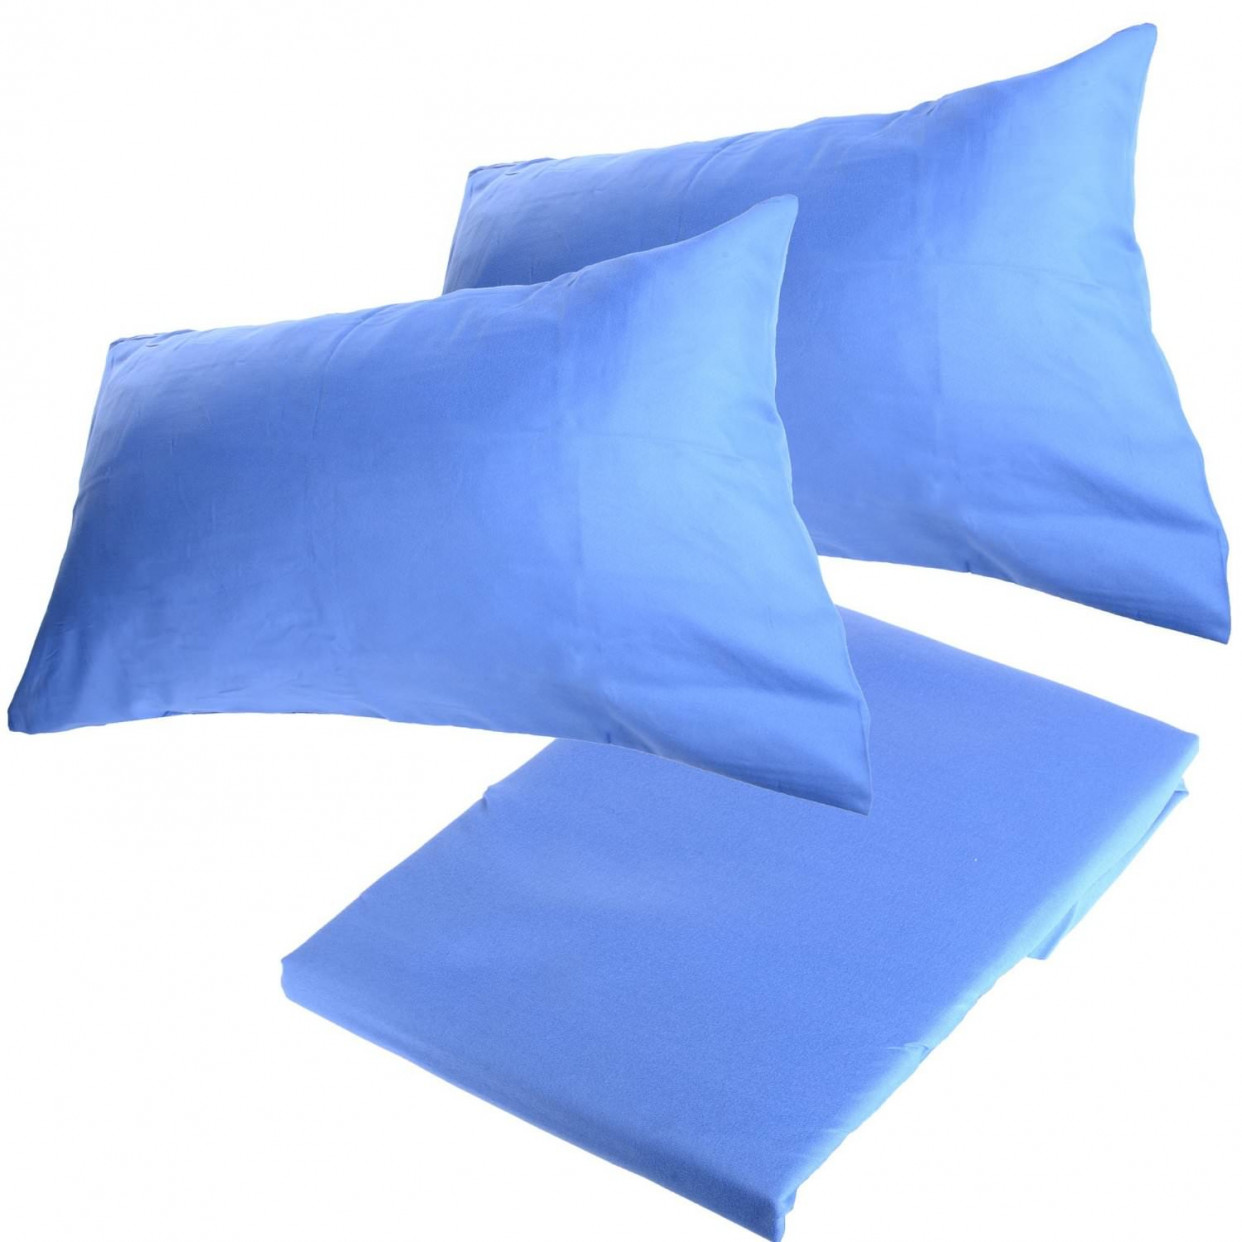 Dreamscene Plain Sheet Set with 2 Pillowcases - Blue, Double>